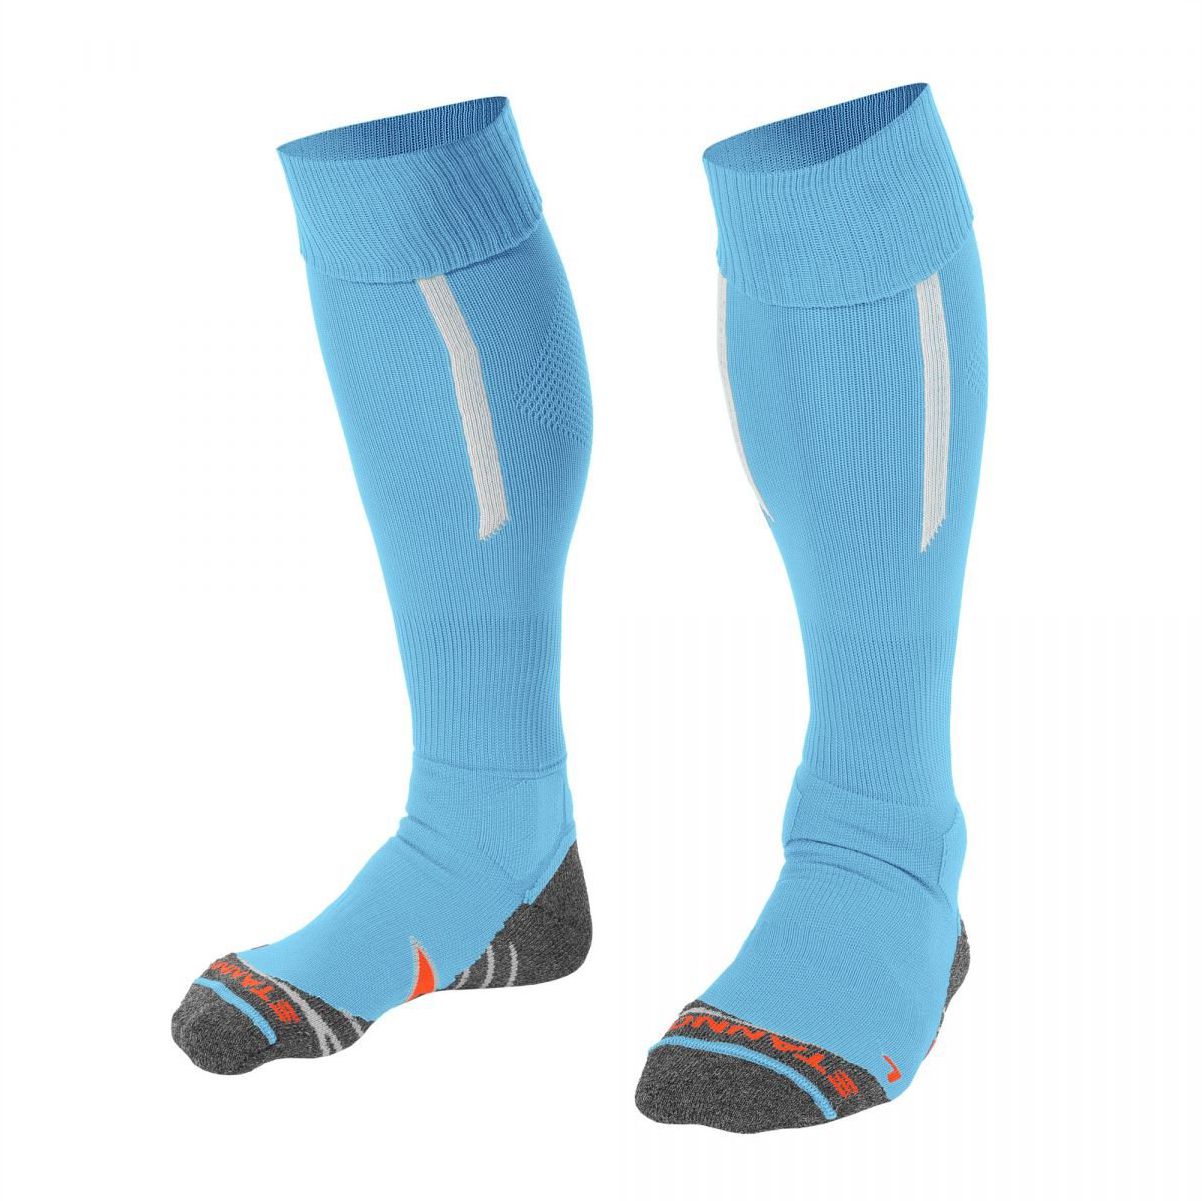 Stanno - Forza II Socks - Sky Blue & White - Adult